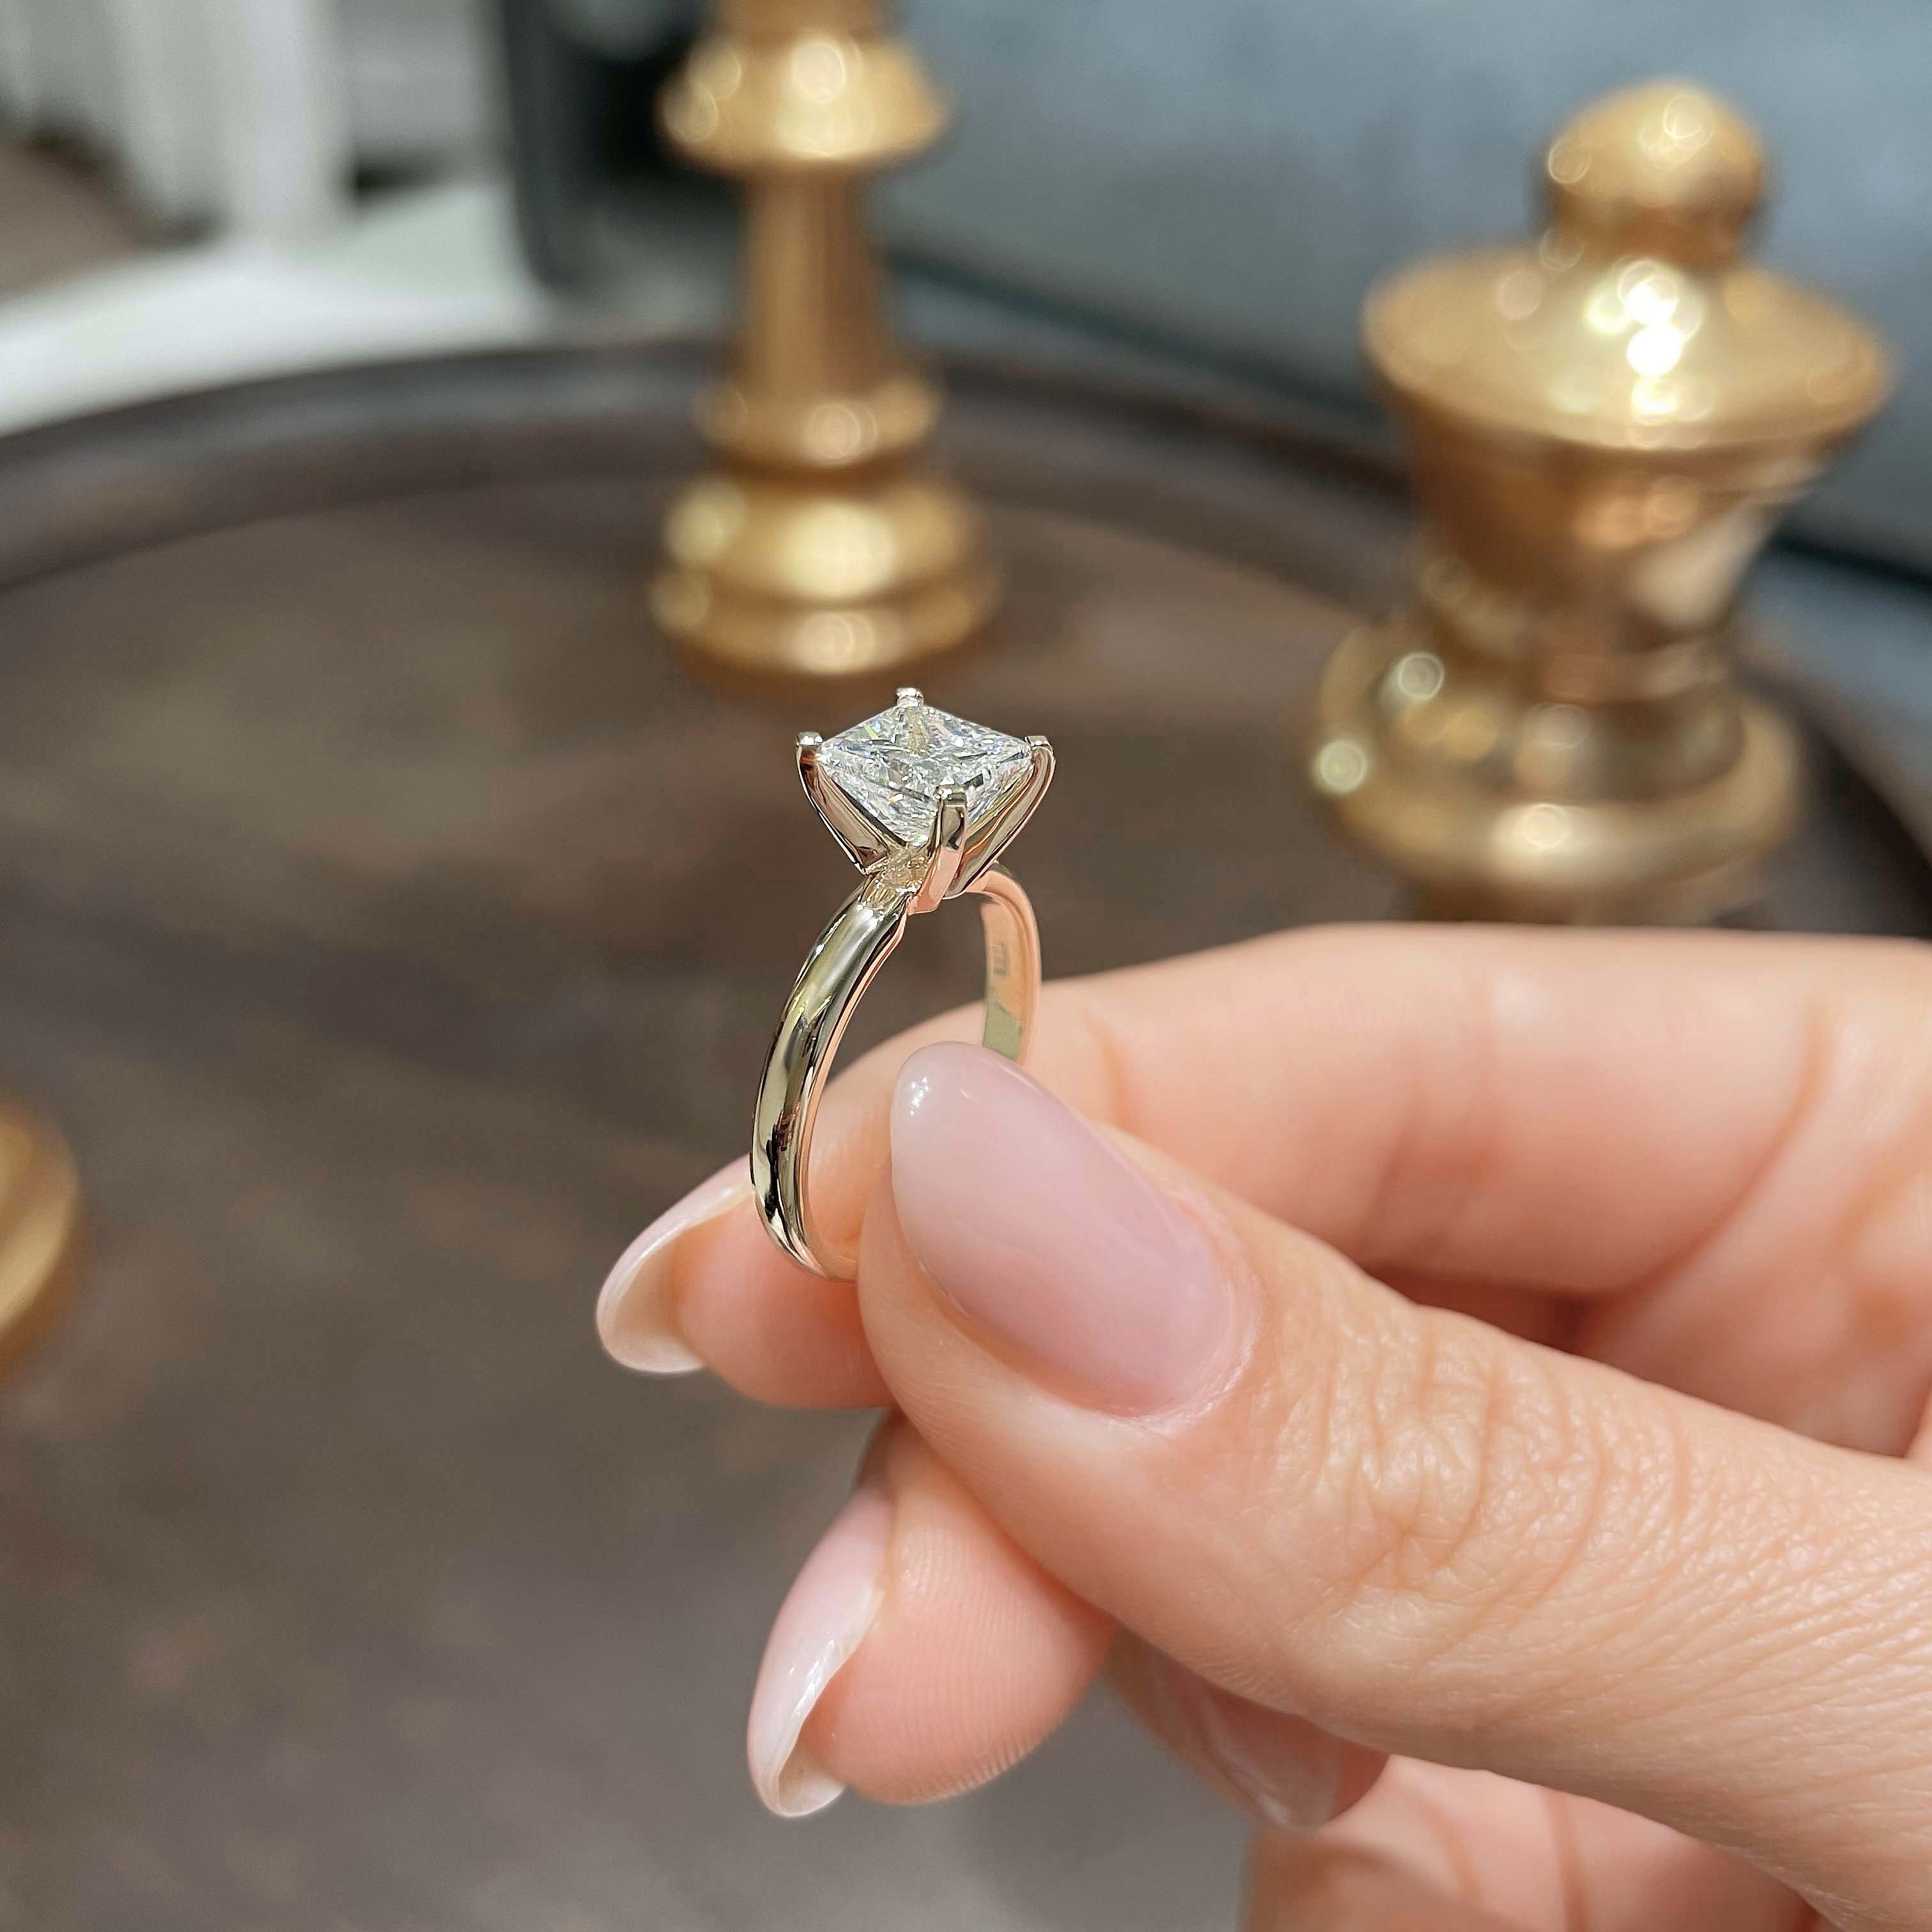 Isabelle Diamond Engagement Ring -18K Yellow Gold